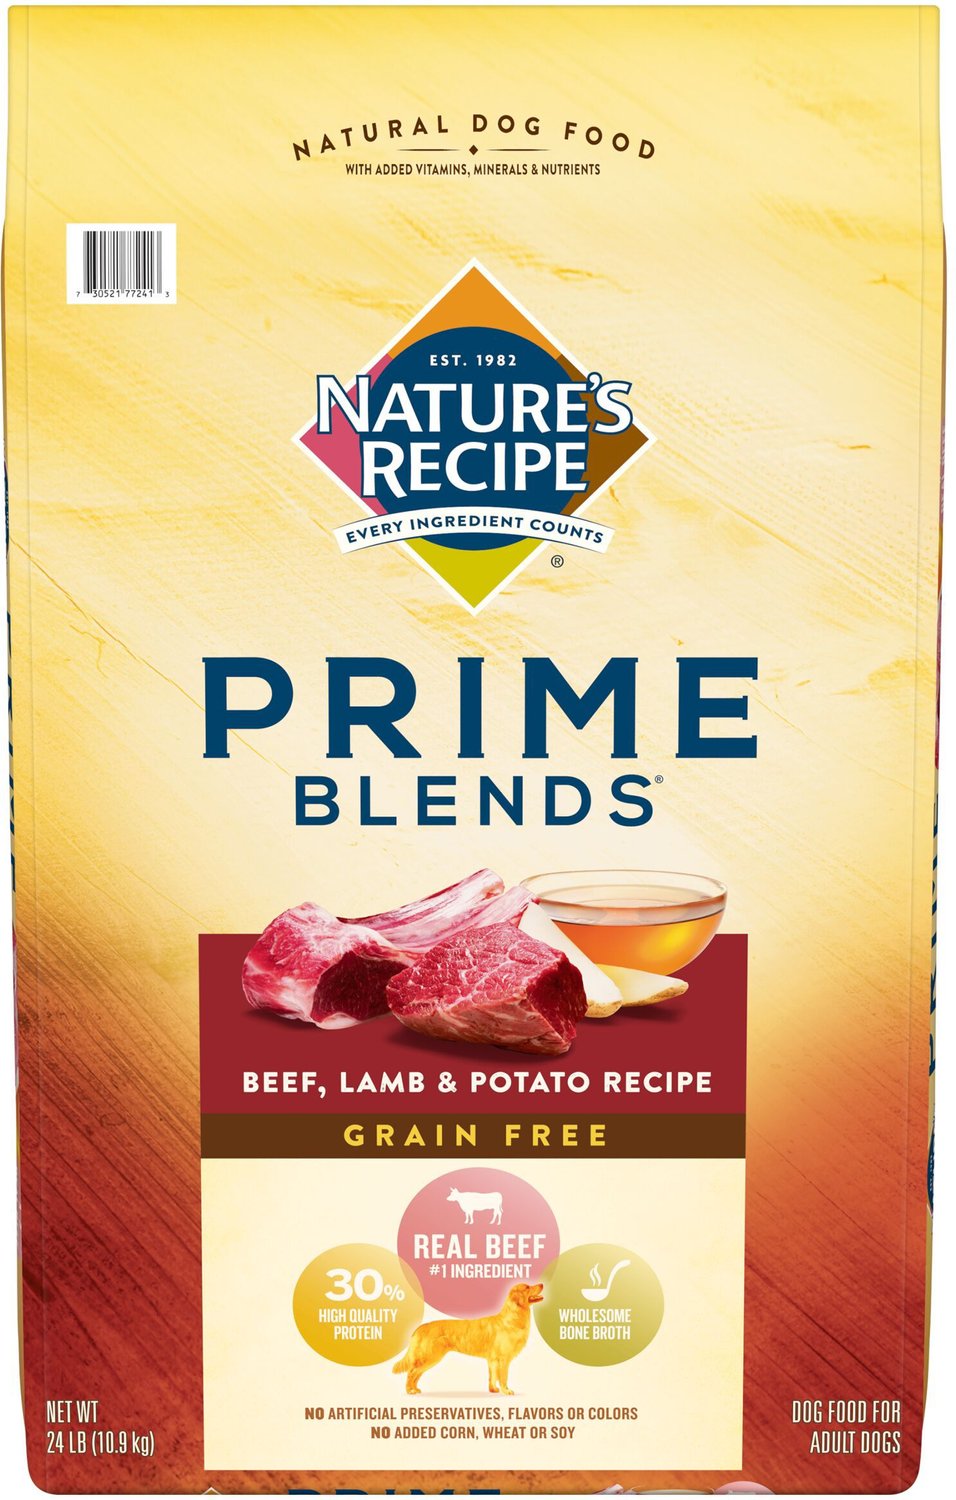 NATURE'S RECIPE Prime Blends Beef, Lamb, and Potato Recipe